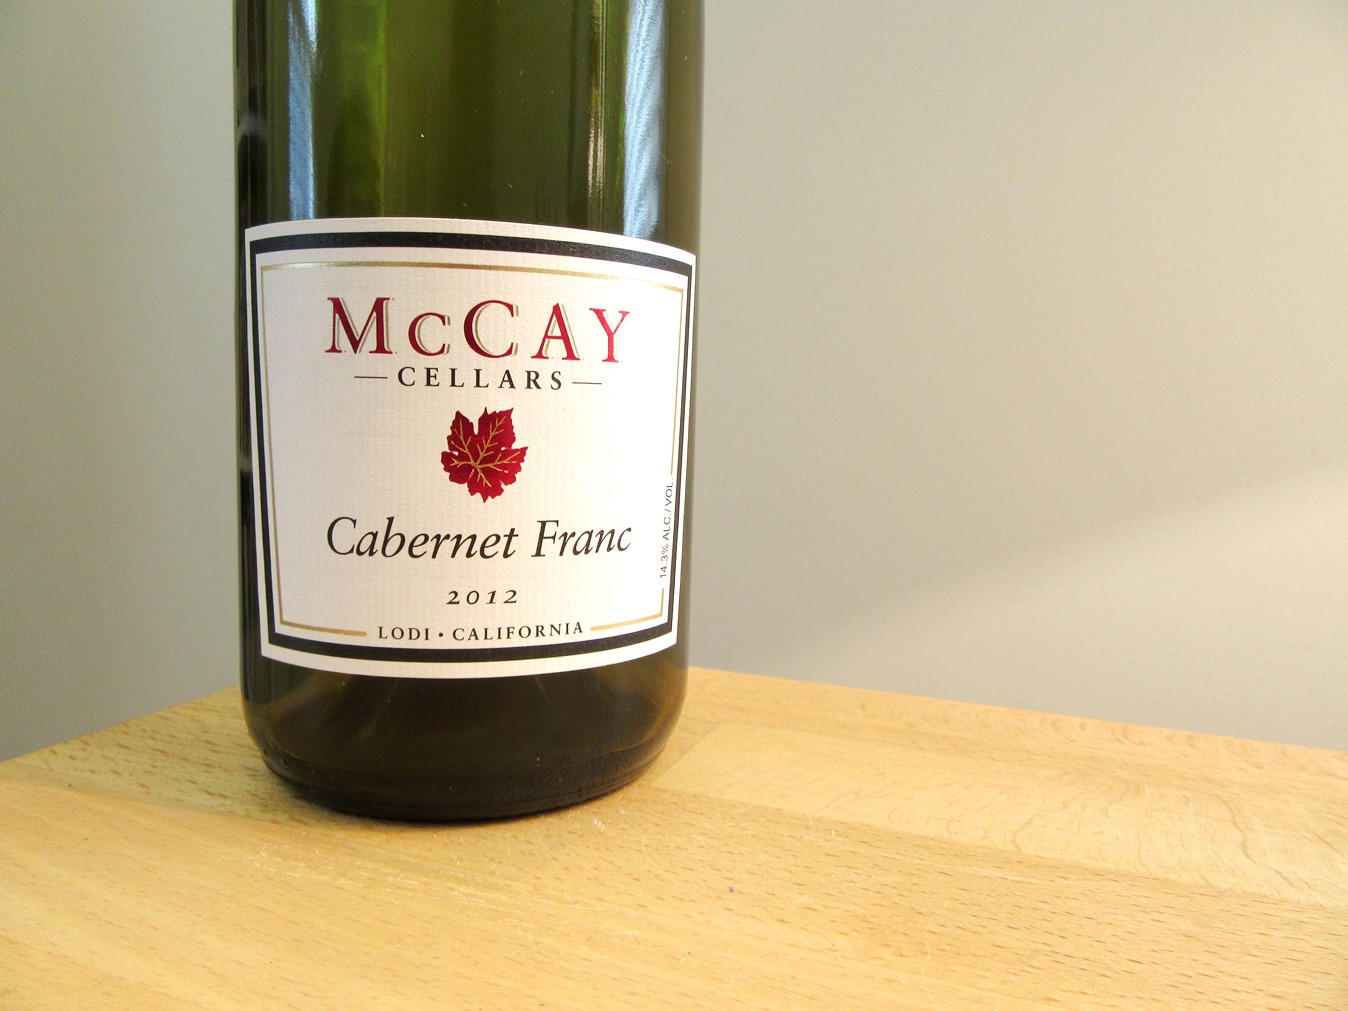 Photo Credit: Wine Casual, McCay Cellars, Cabernet Franc 2012, Lodi, California